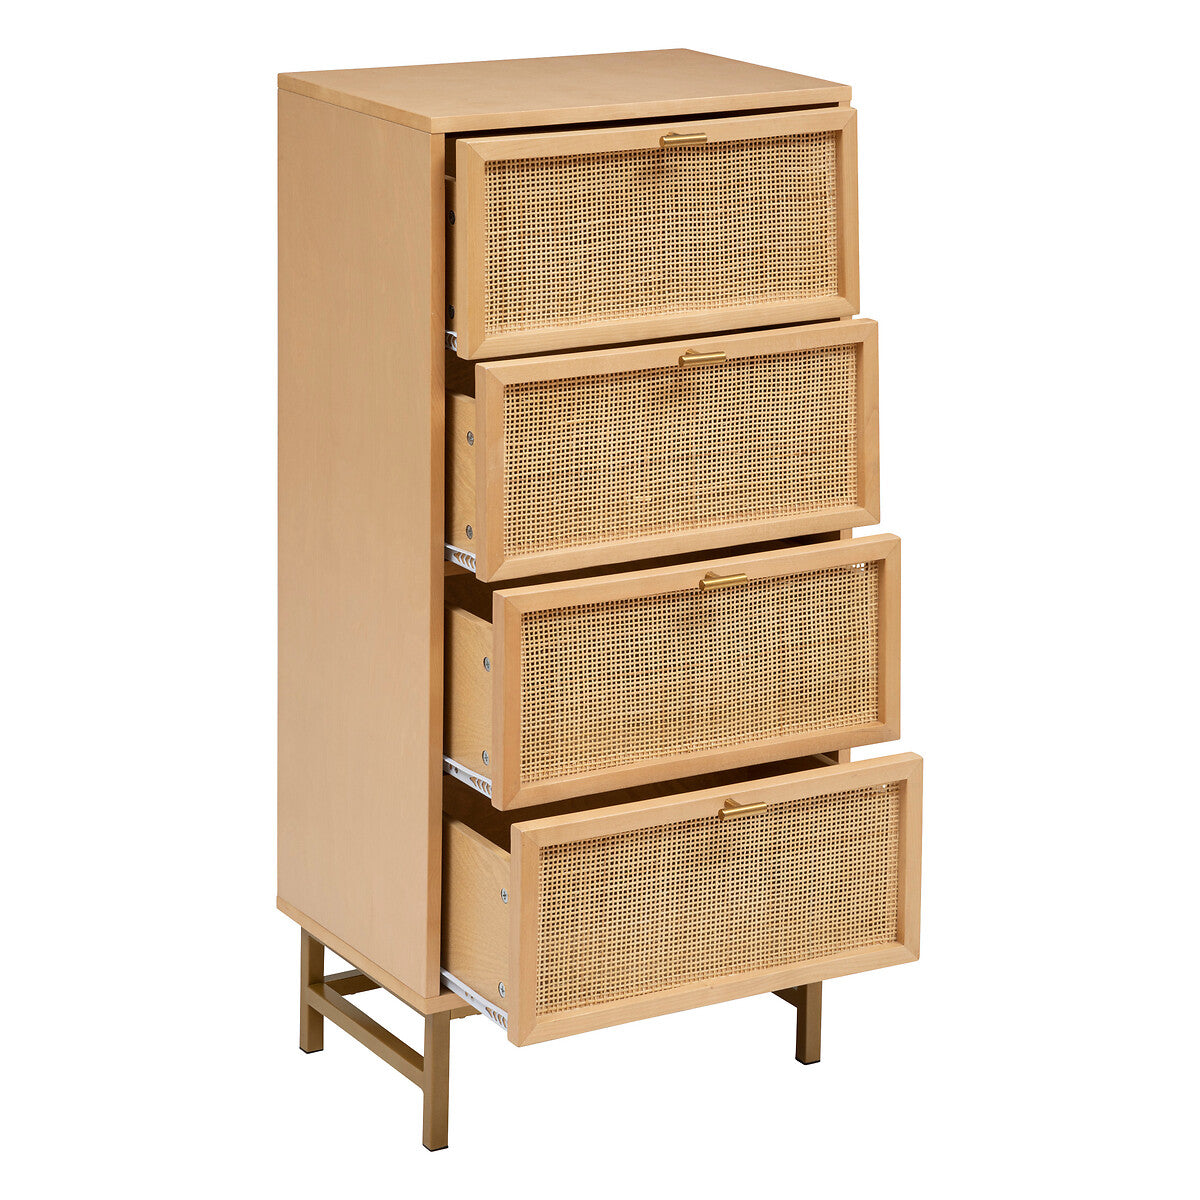 BEAU Adeva birch/rattan 4L chest of drawers - L50xD35xH107cm - Beige